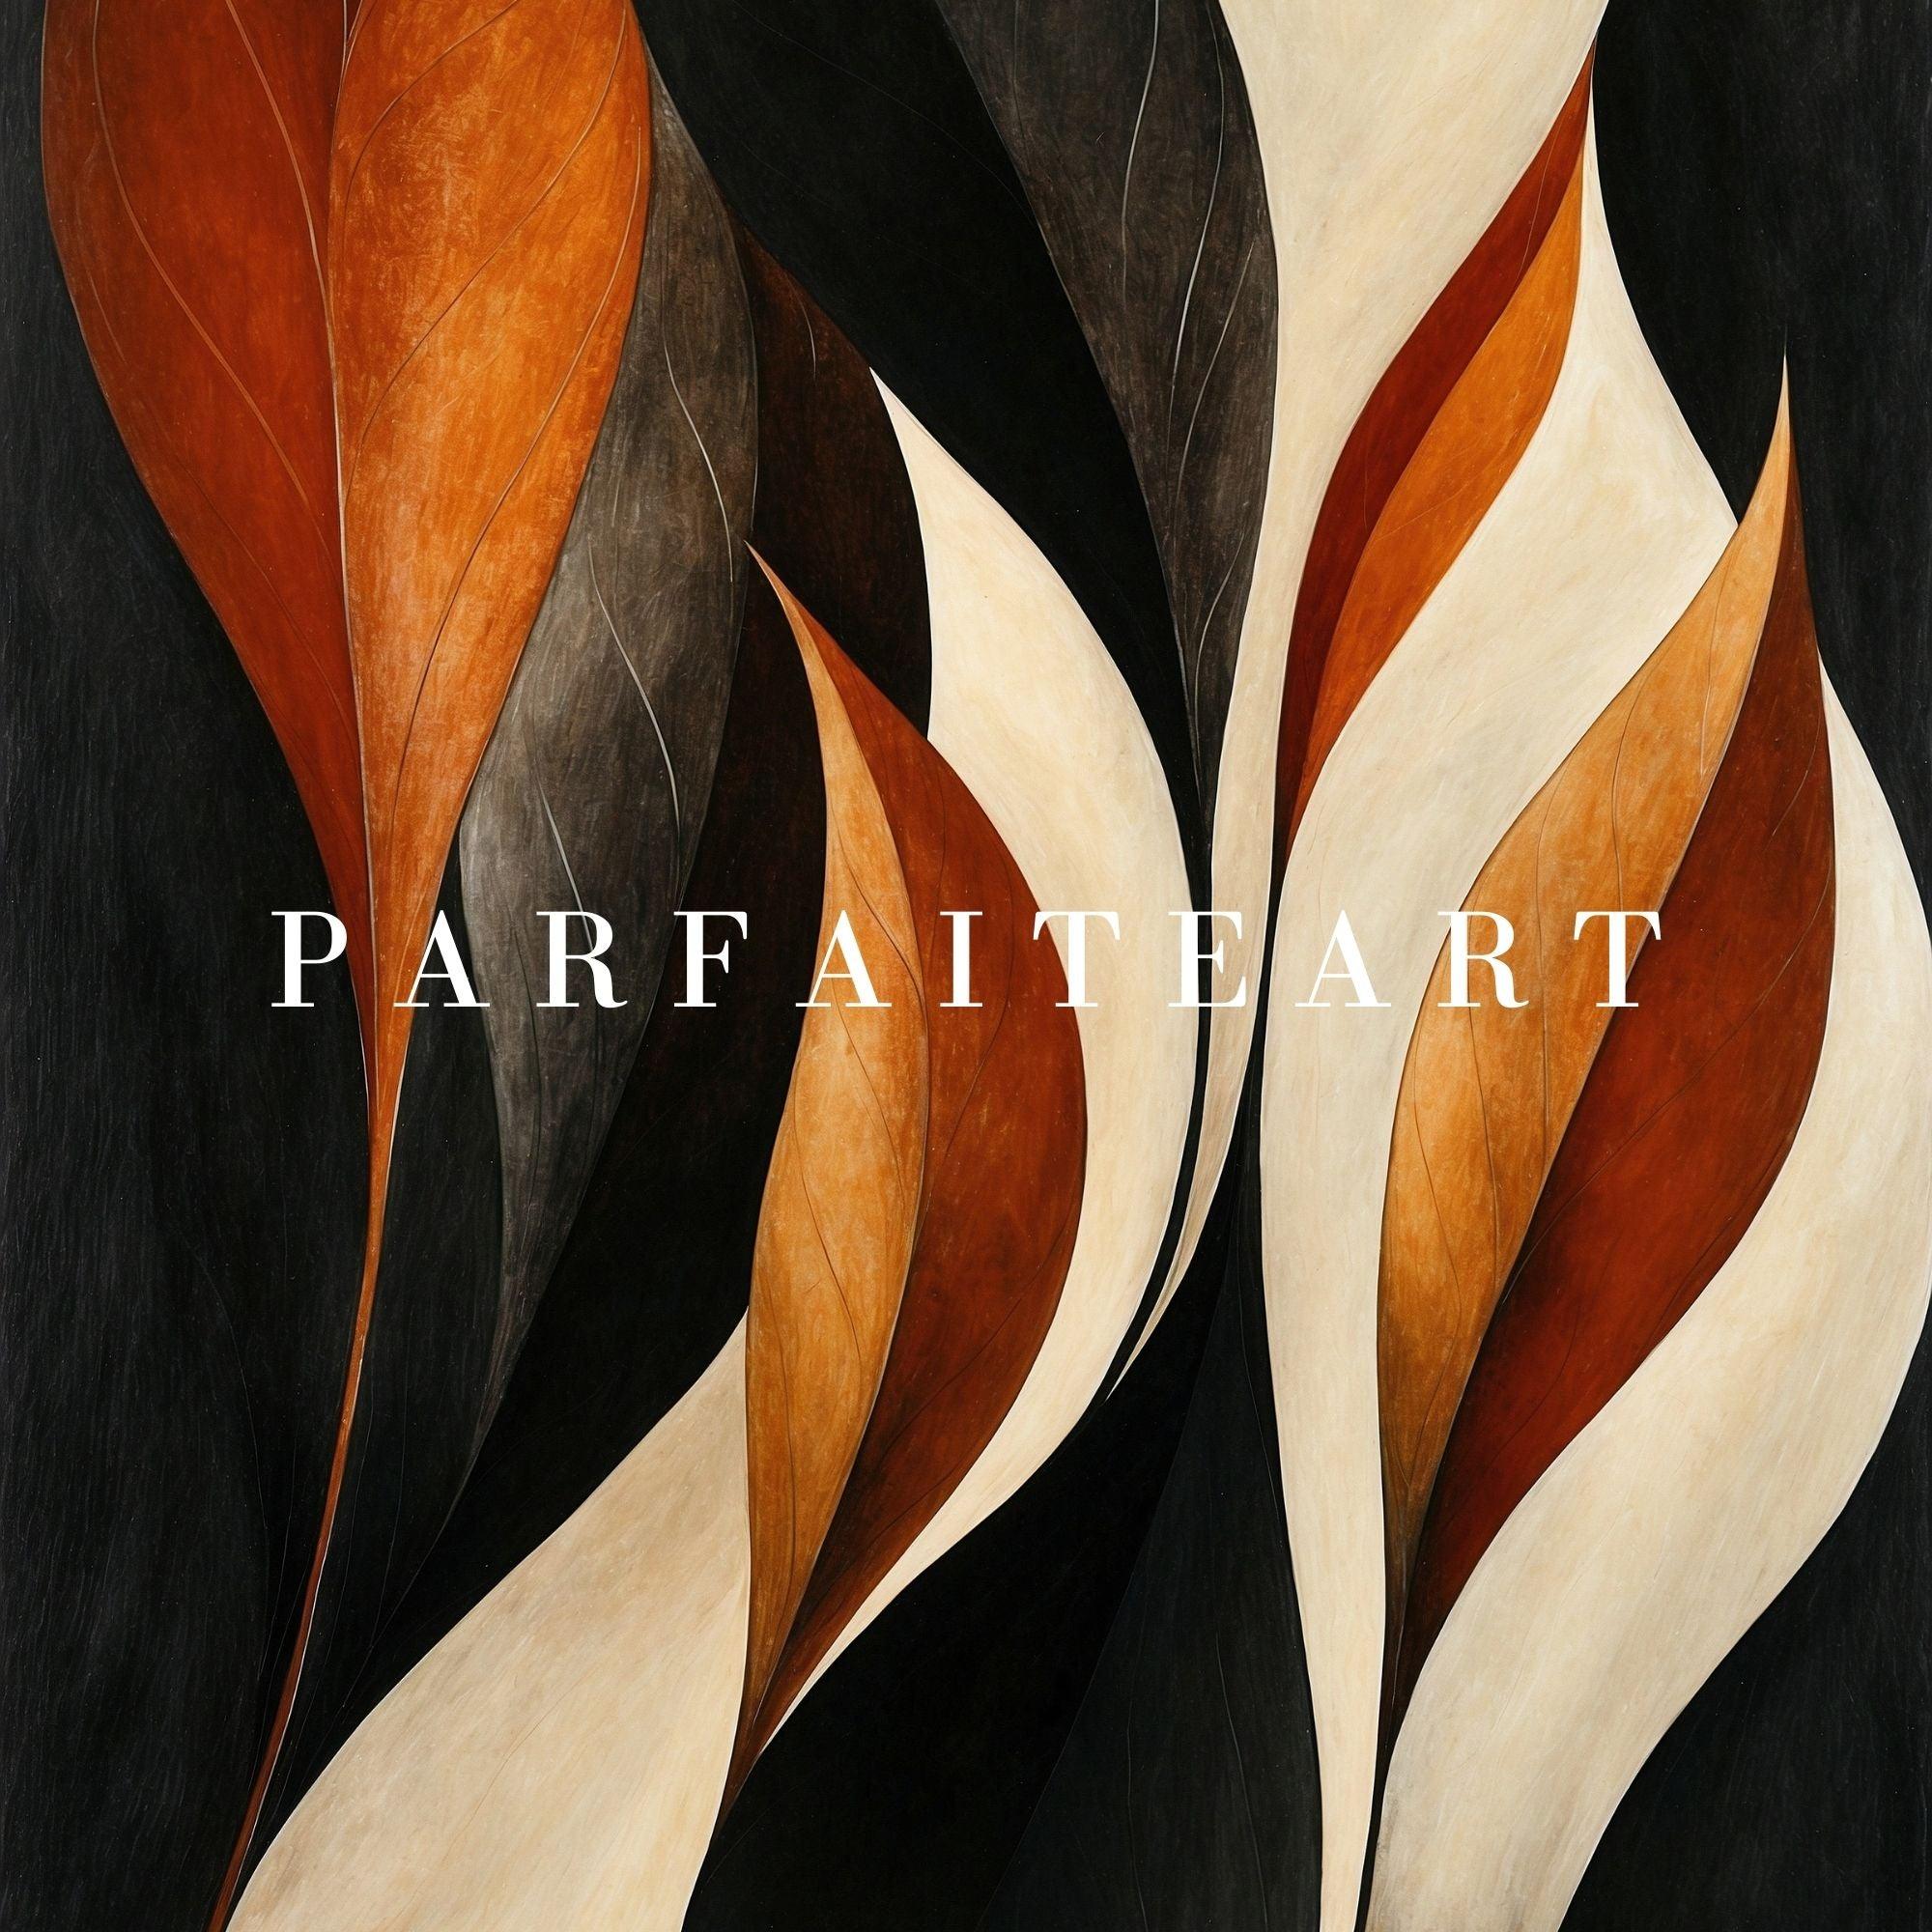 Abstract Wall Art,Botany,Premium Matte Paper Wooden Framed Poster AF 7 - ParfaiteArt